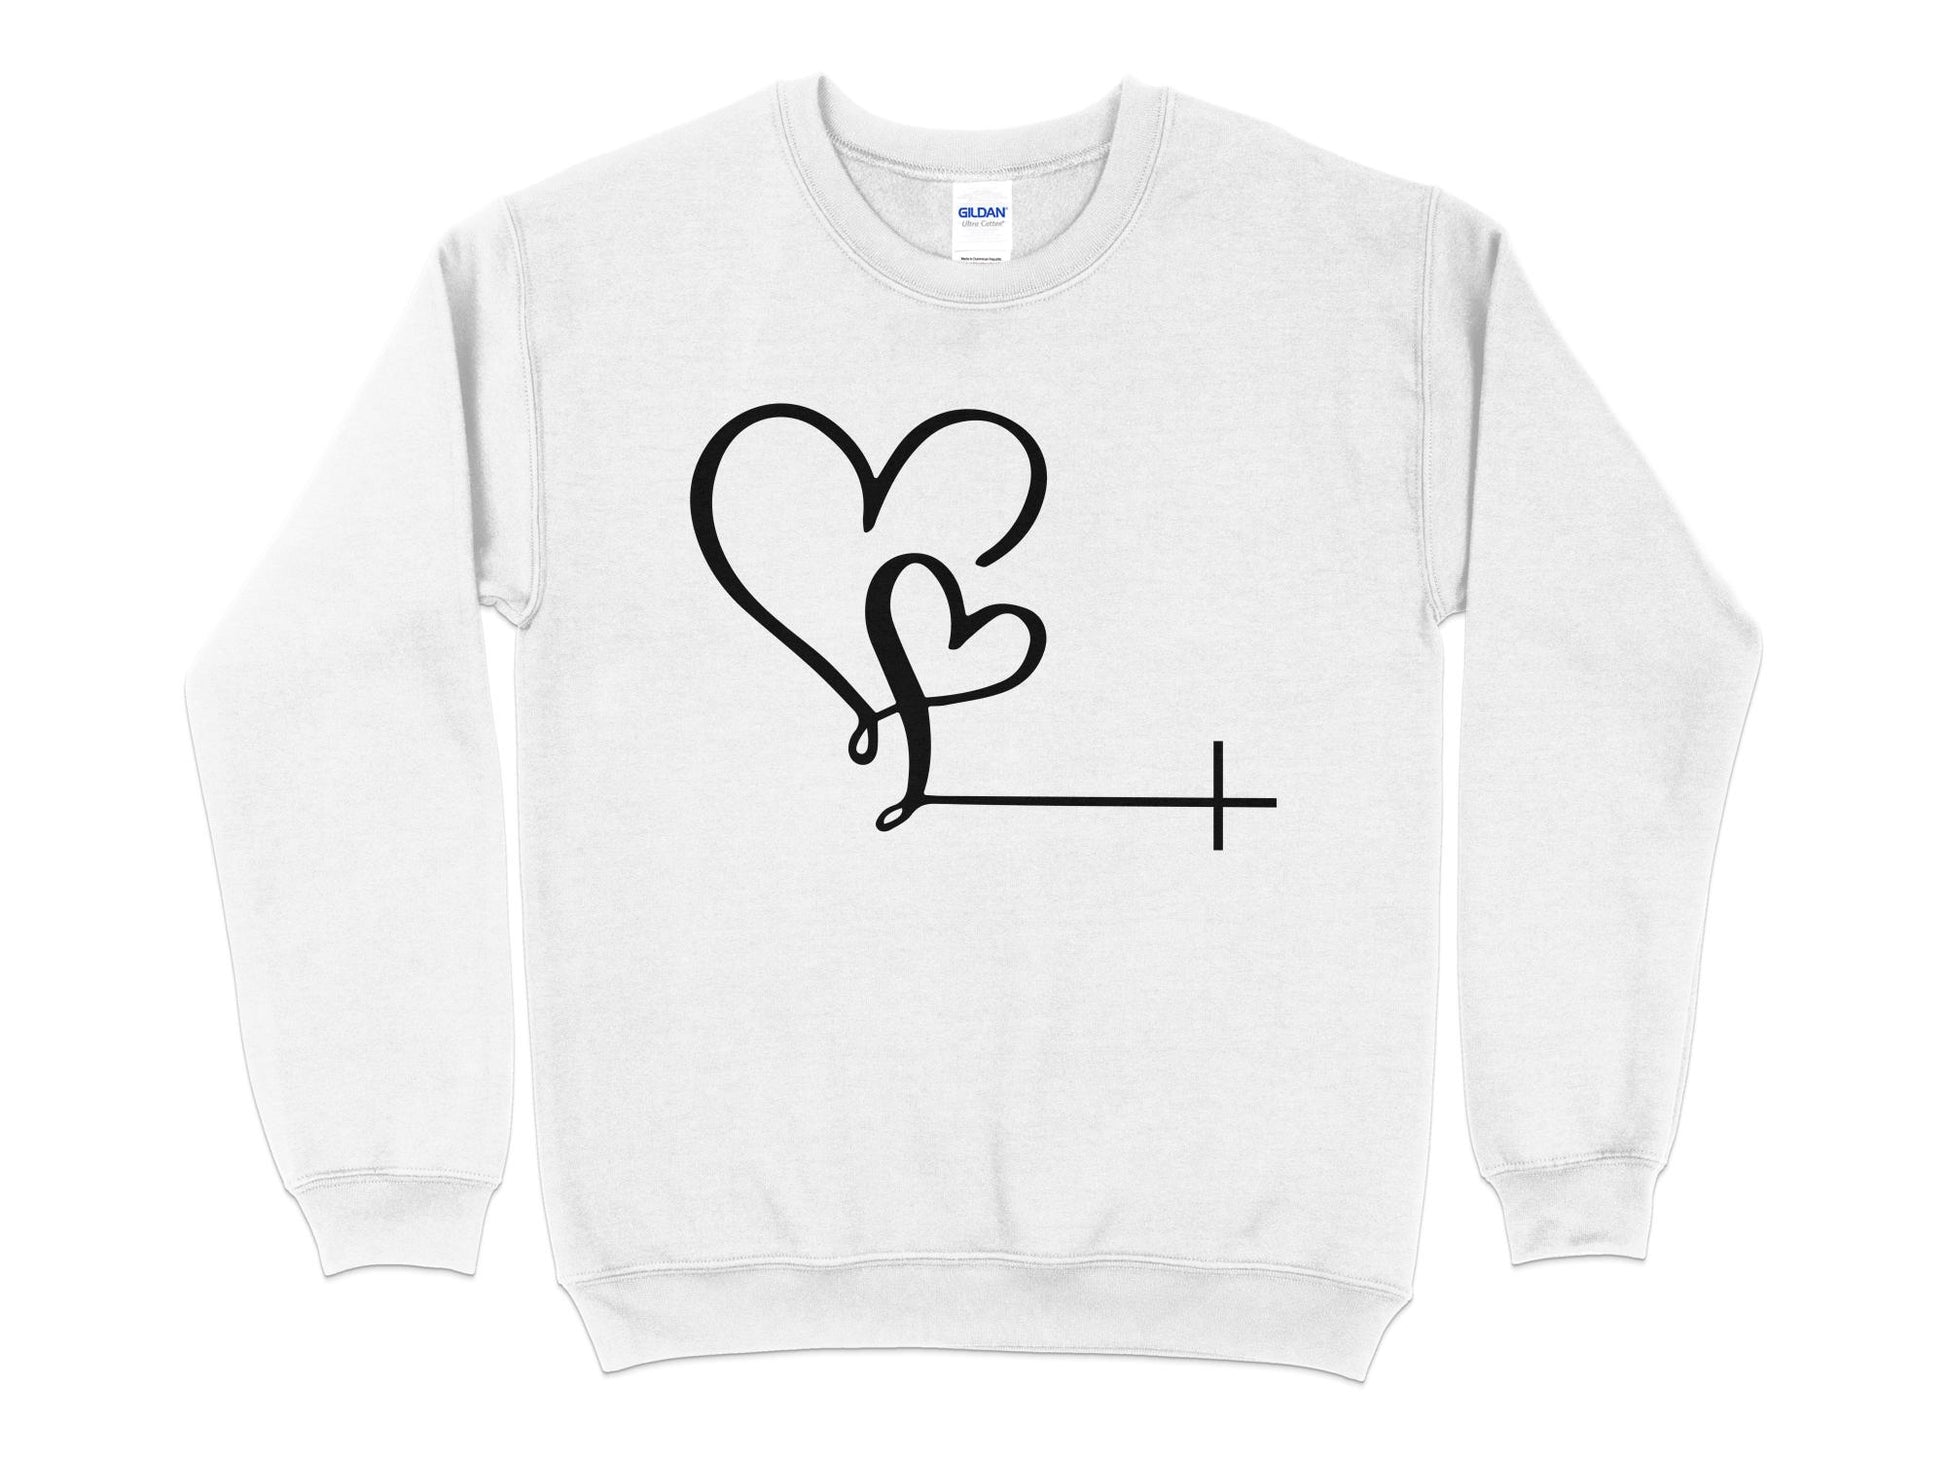 Unisex Love Heart Christian Sweatshirt, Casual Pullover,Gift for Him and Her, Cozy Apparel, Christian Faith Shirt - Mardonyx Sweatshirt S / White